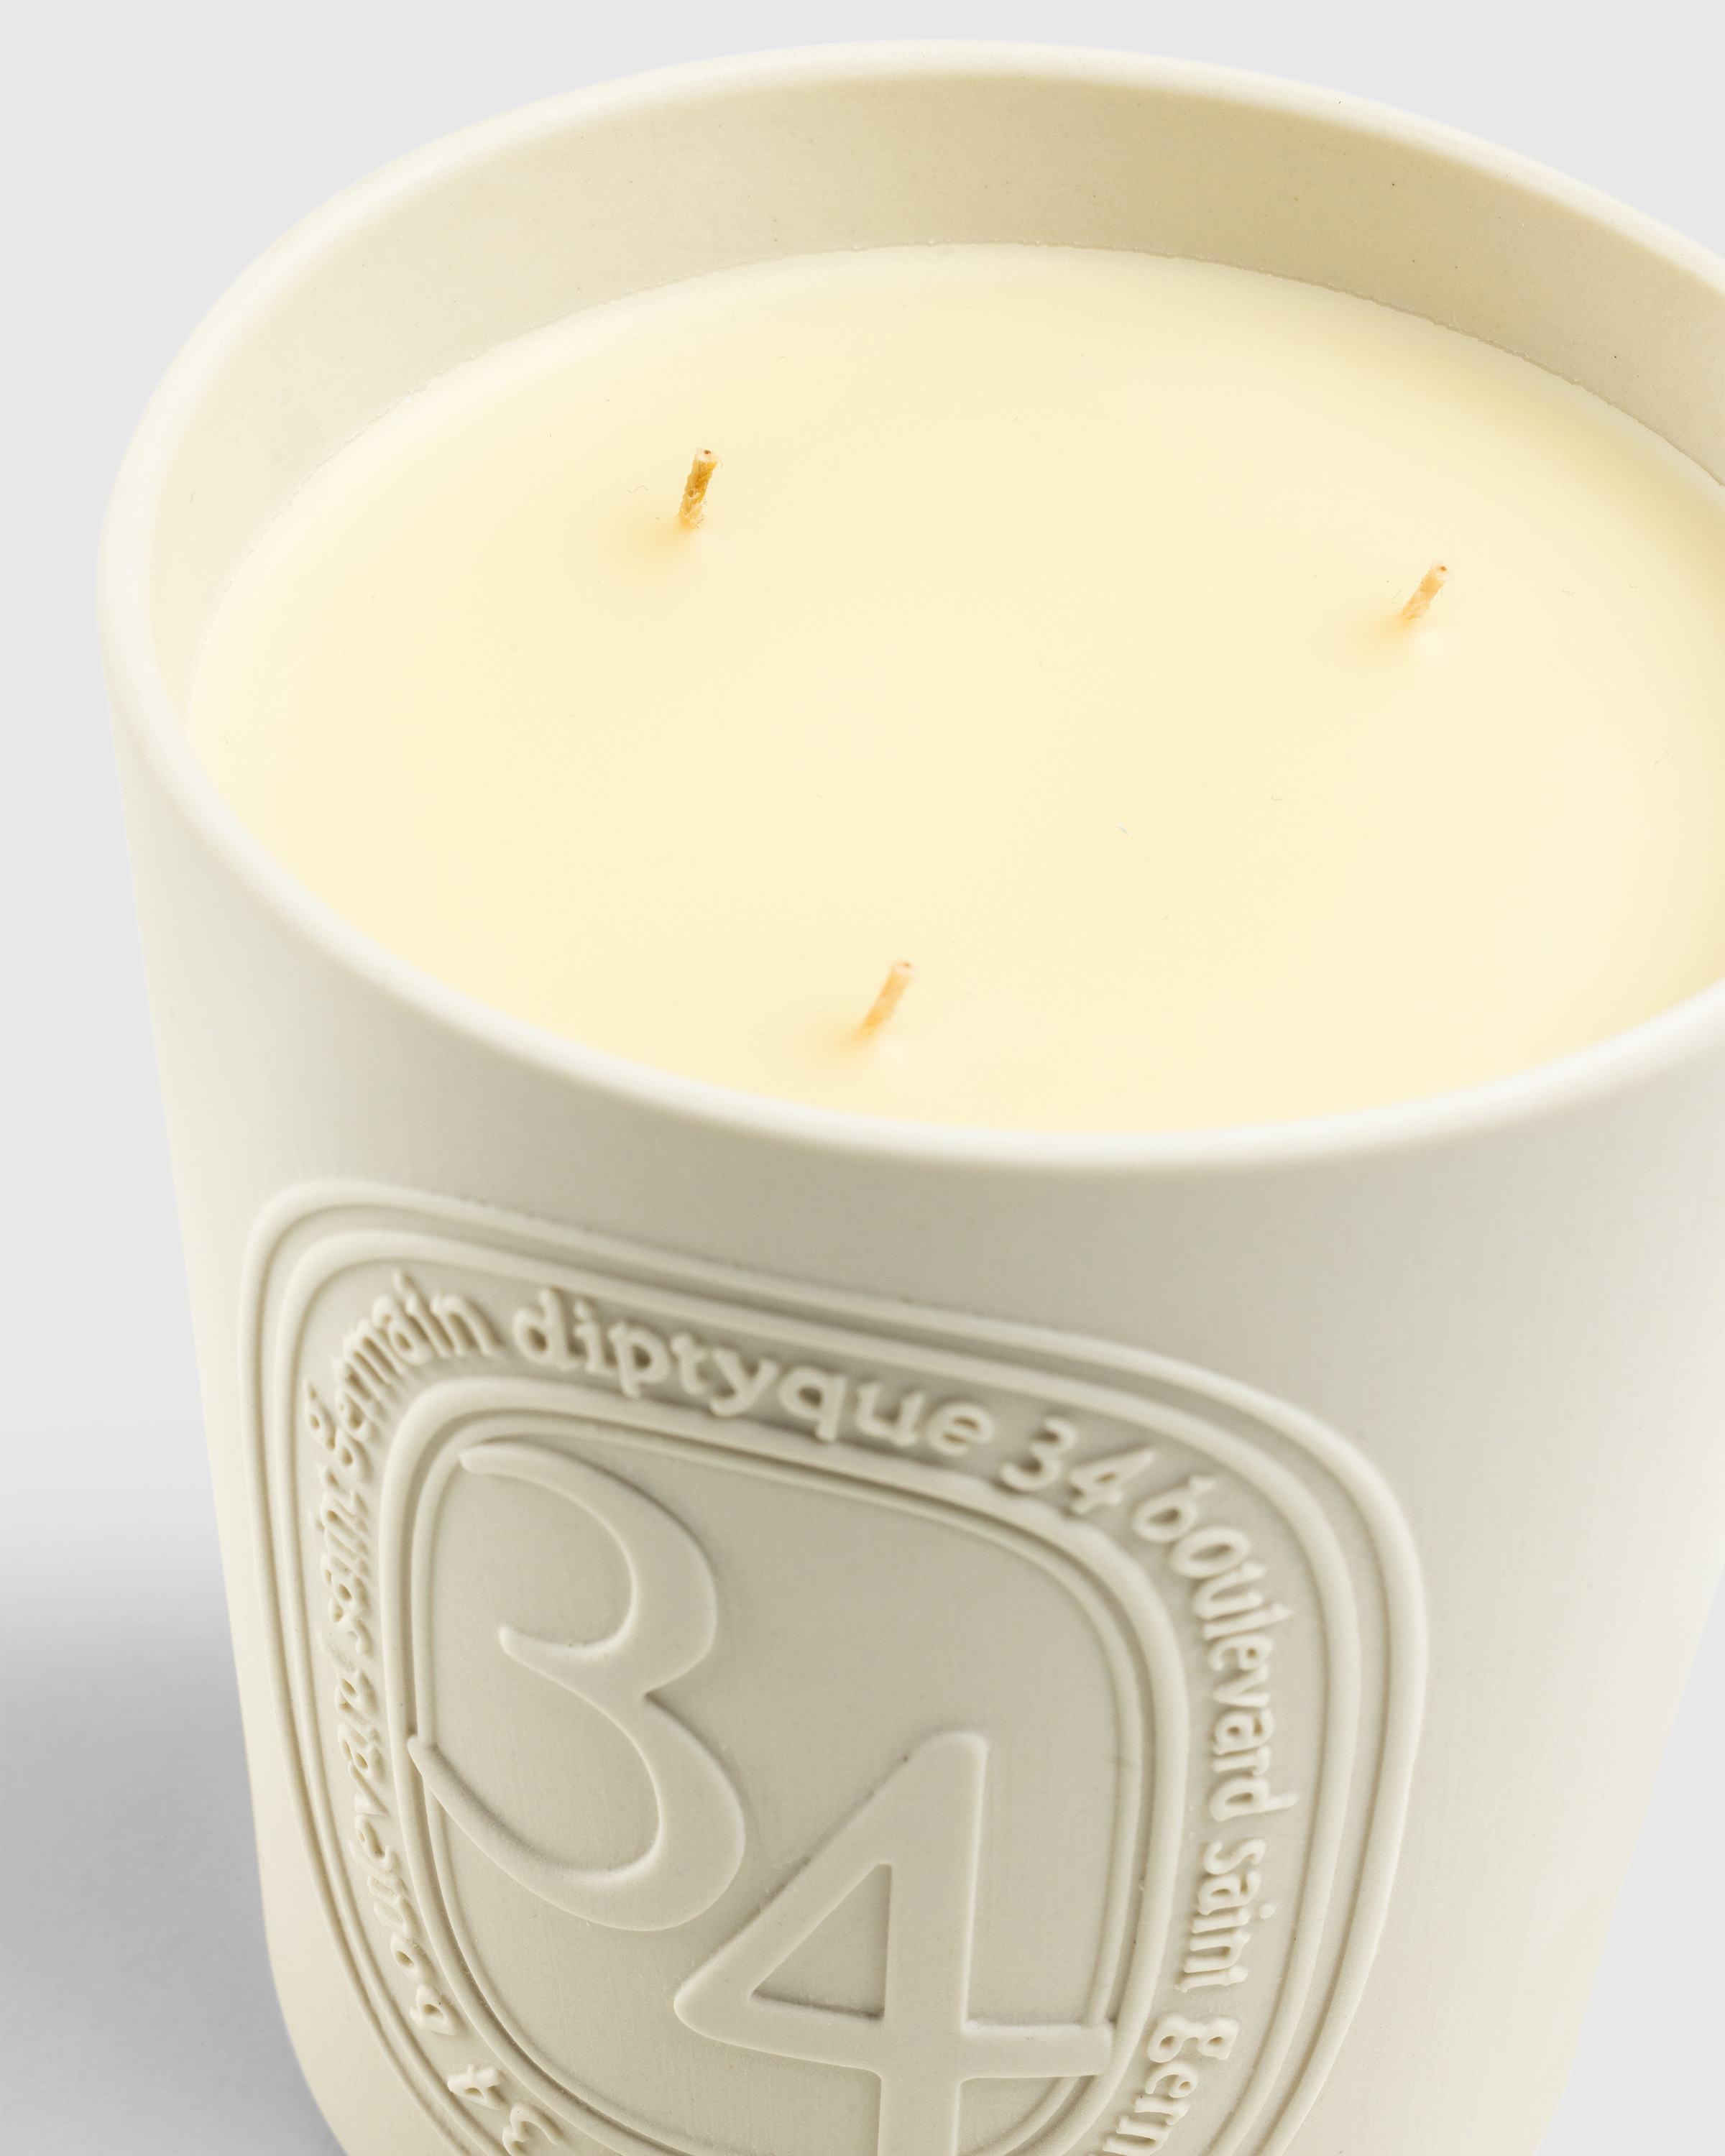 Diptyque – Candle 34 Boulevard Saint-Germain 600g - Candles & Fragrances - Transparent - Image 2